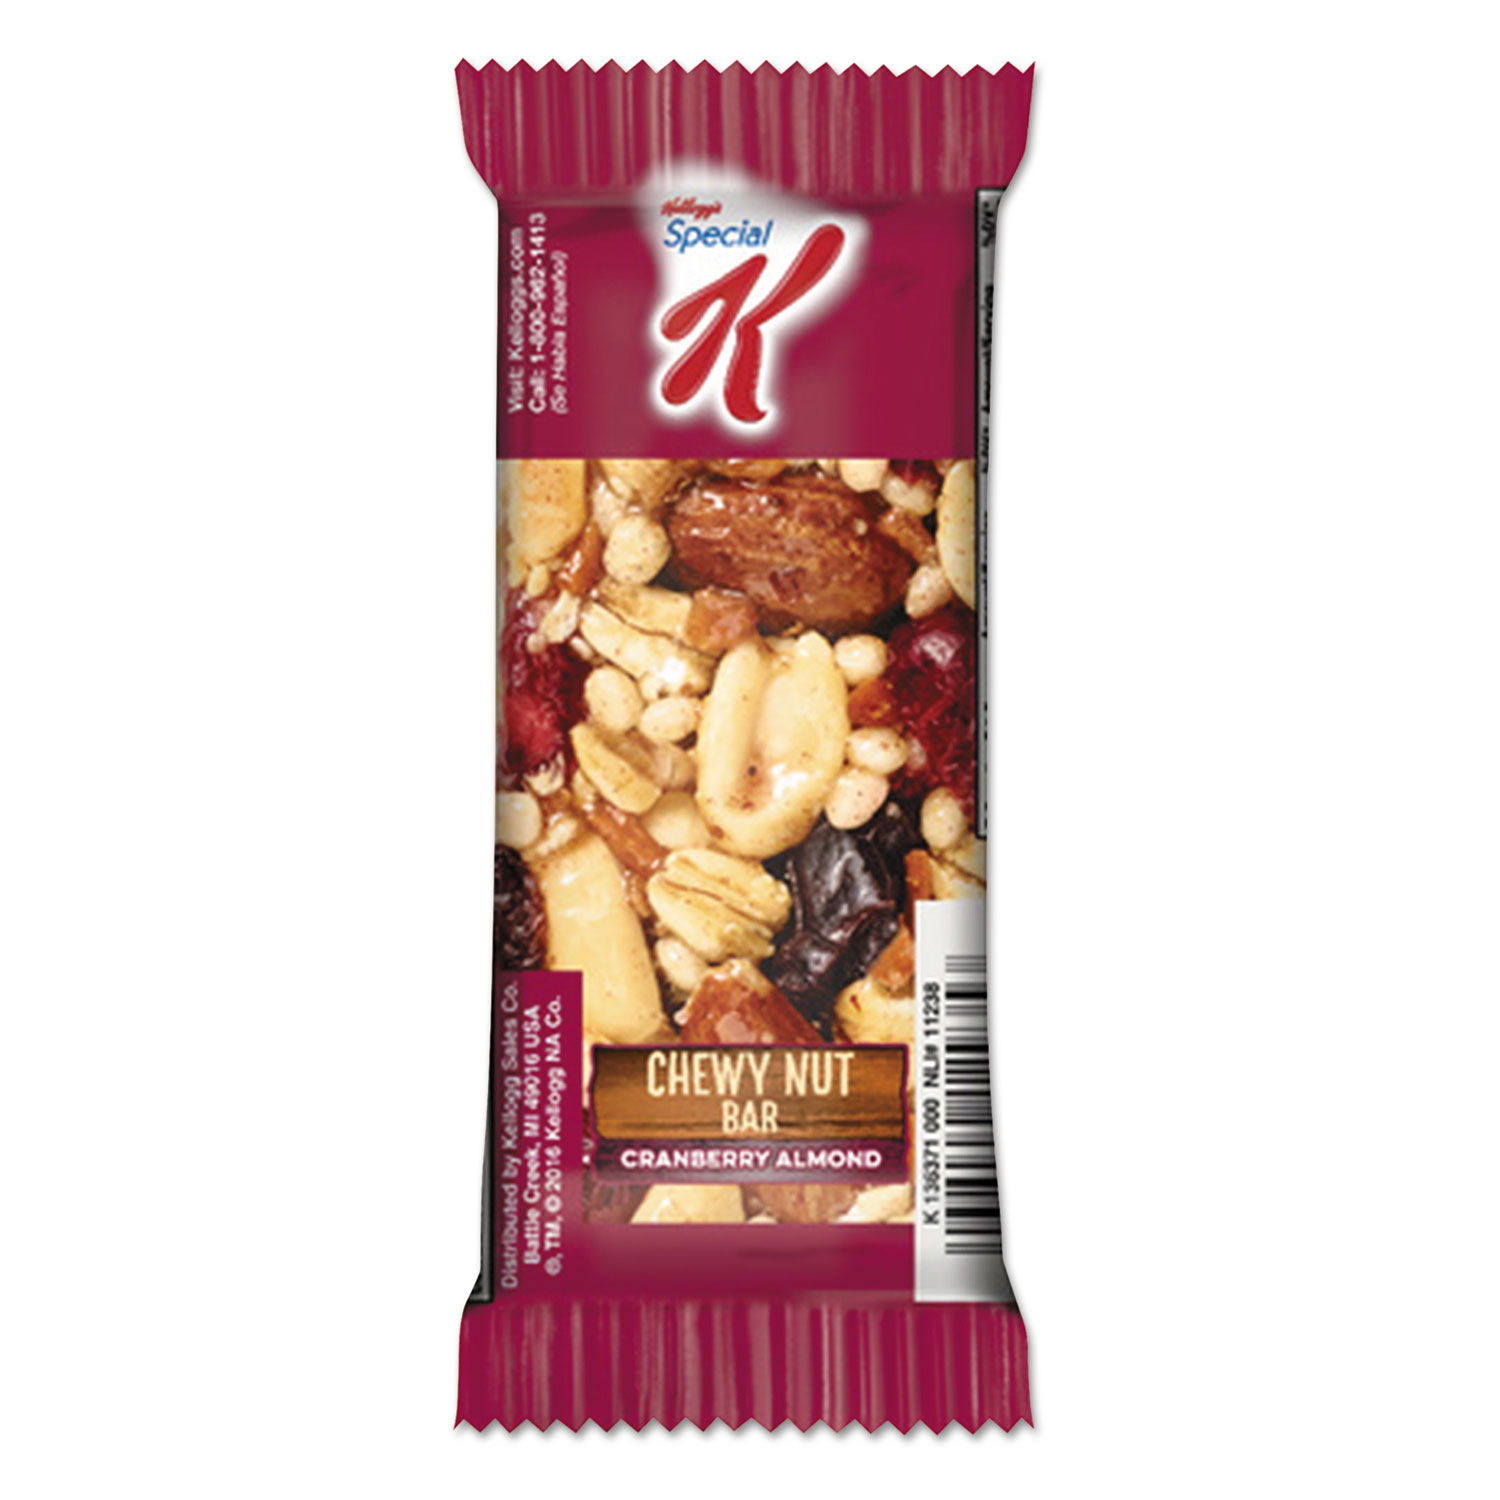  Kellogg's 3800014606 Special K Chewy Nut Bars, Cranberry Almond, 1.16 oz Bar, 6/Box (KEB14606) 